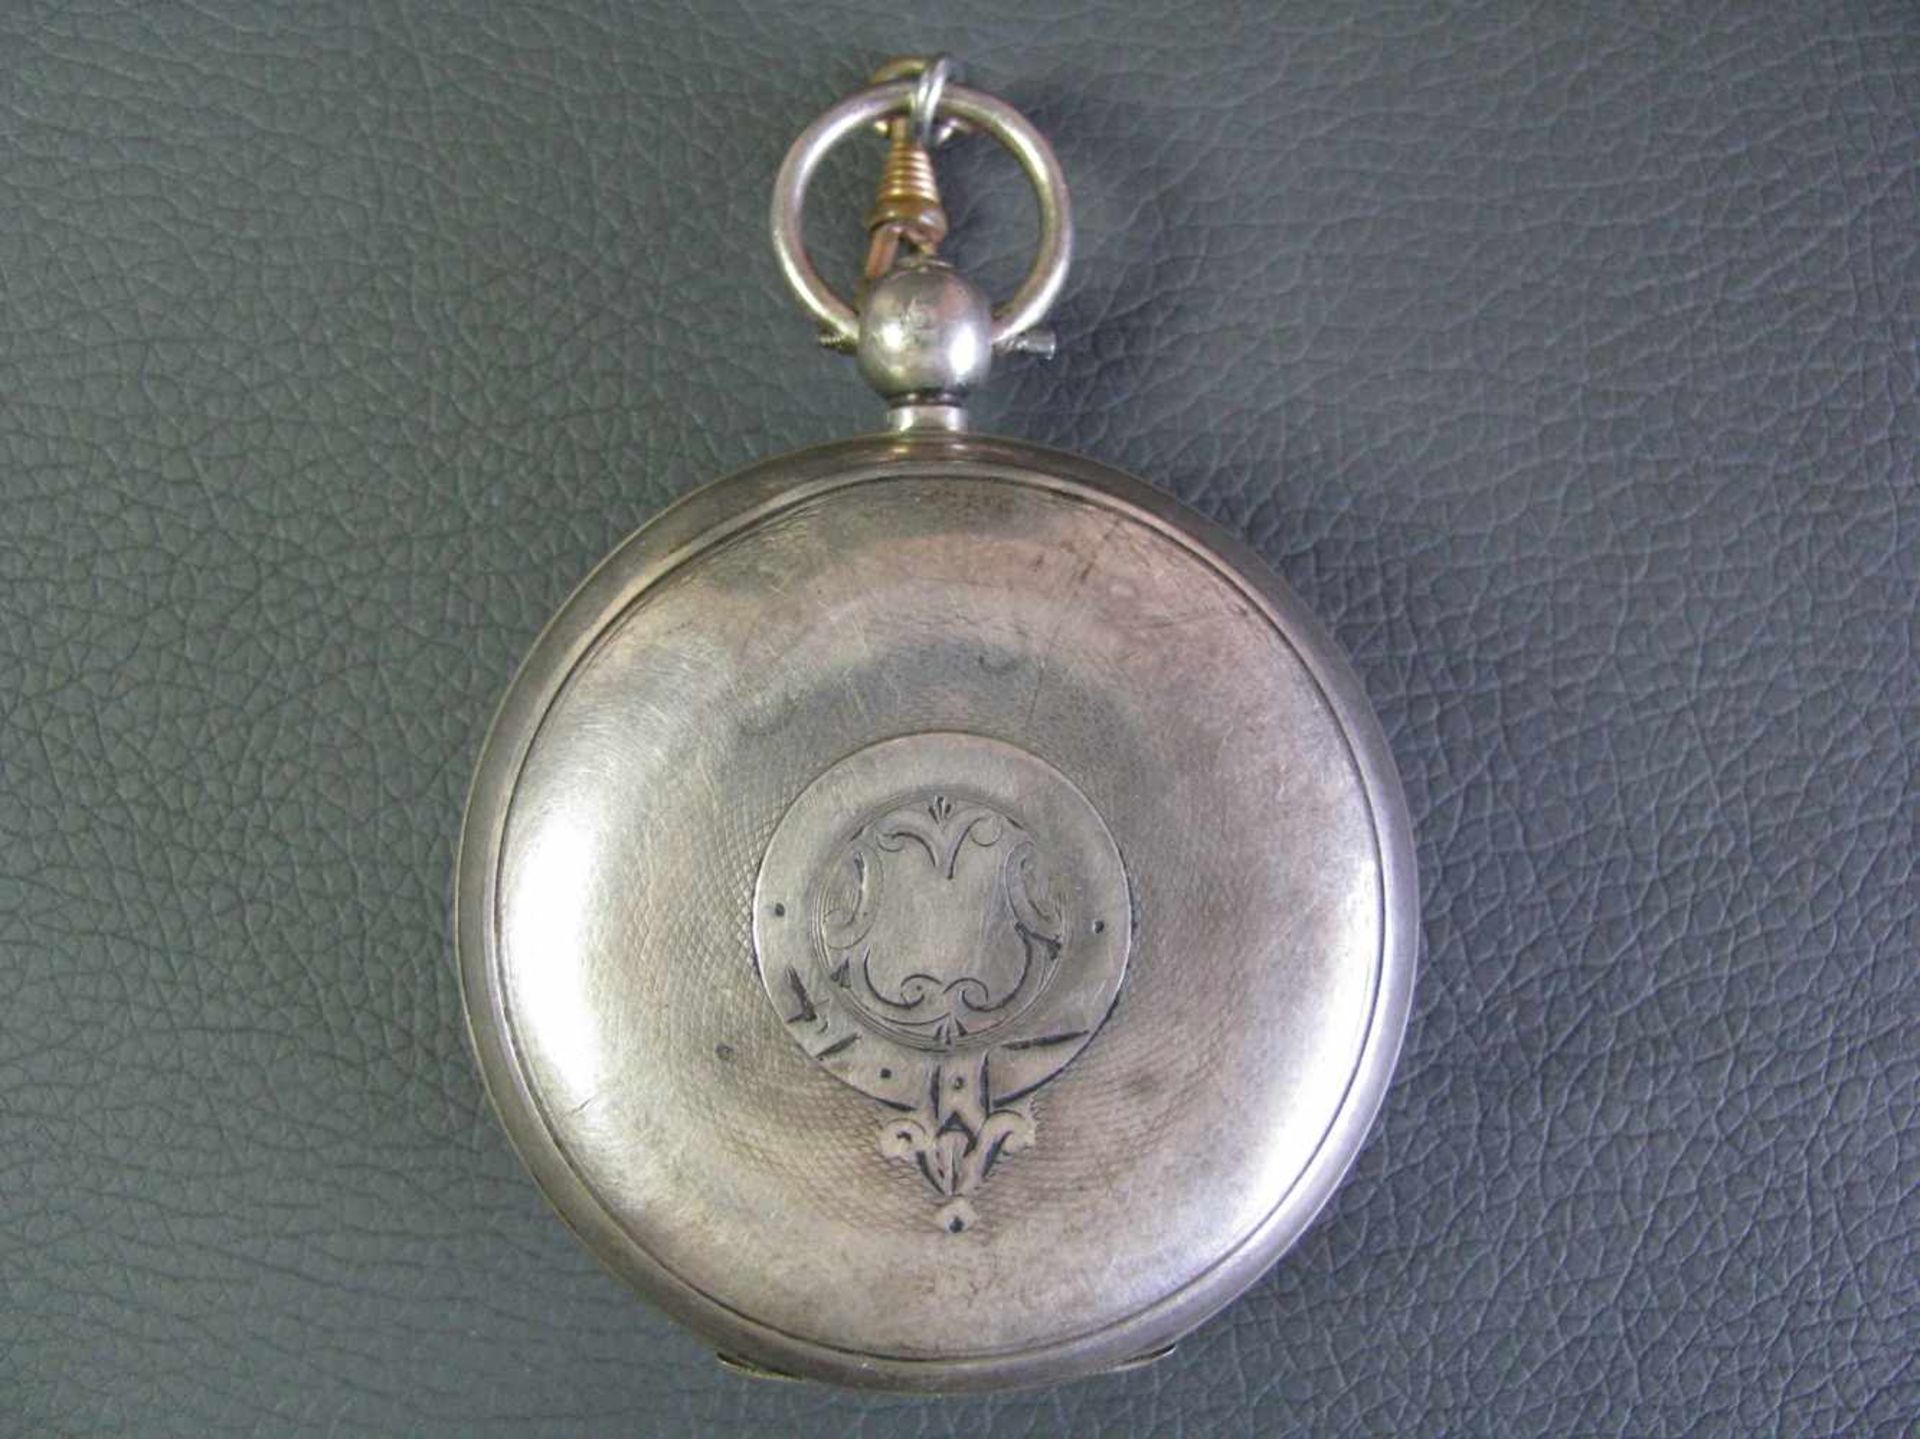 Taschenuhr, England, 19. Jahrhundert, Gehäuse, 925er Sterlingsilber, gepunzt, Schlüsselaufzug, - Image 2 of 3